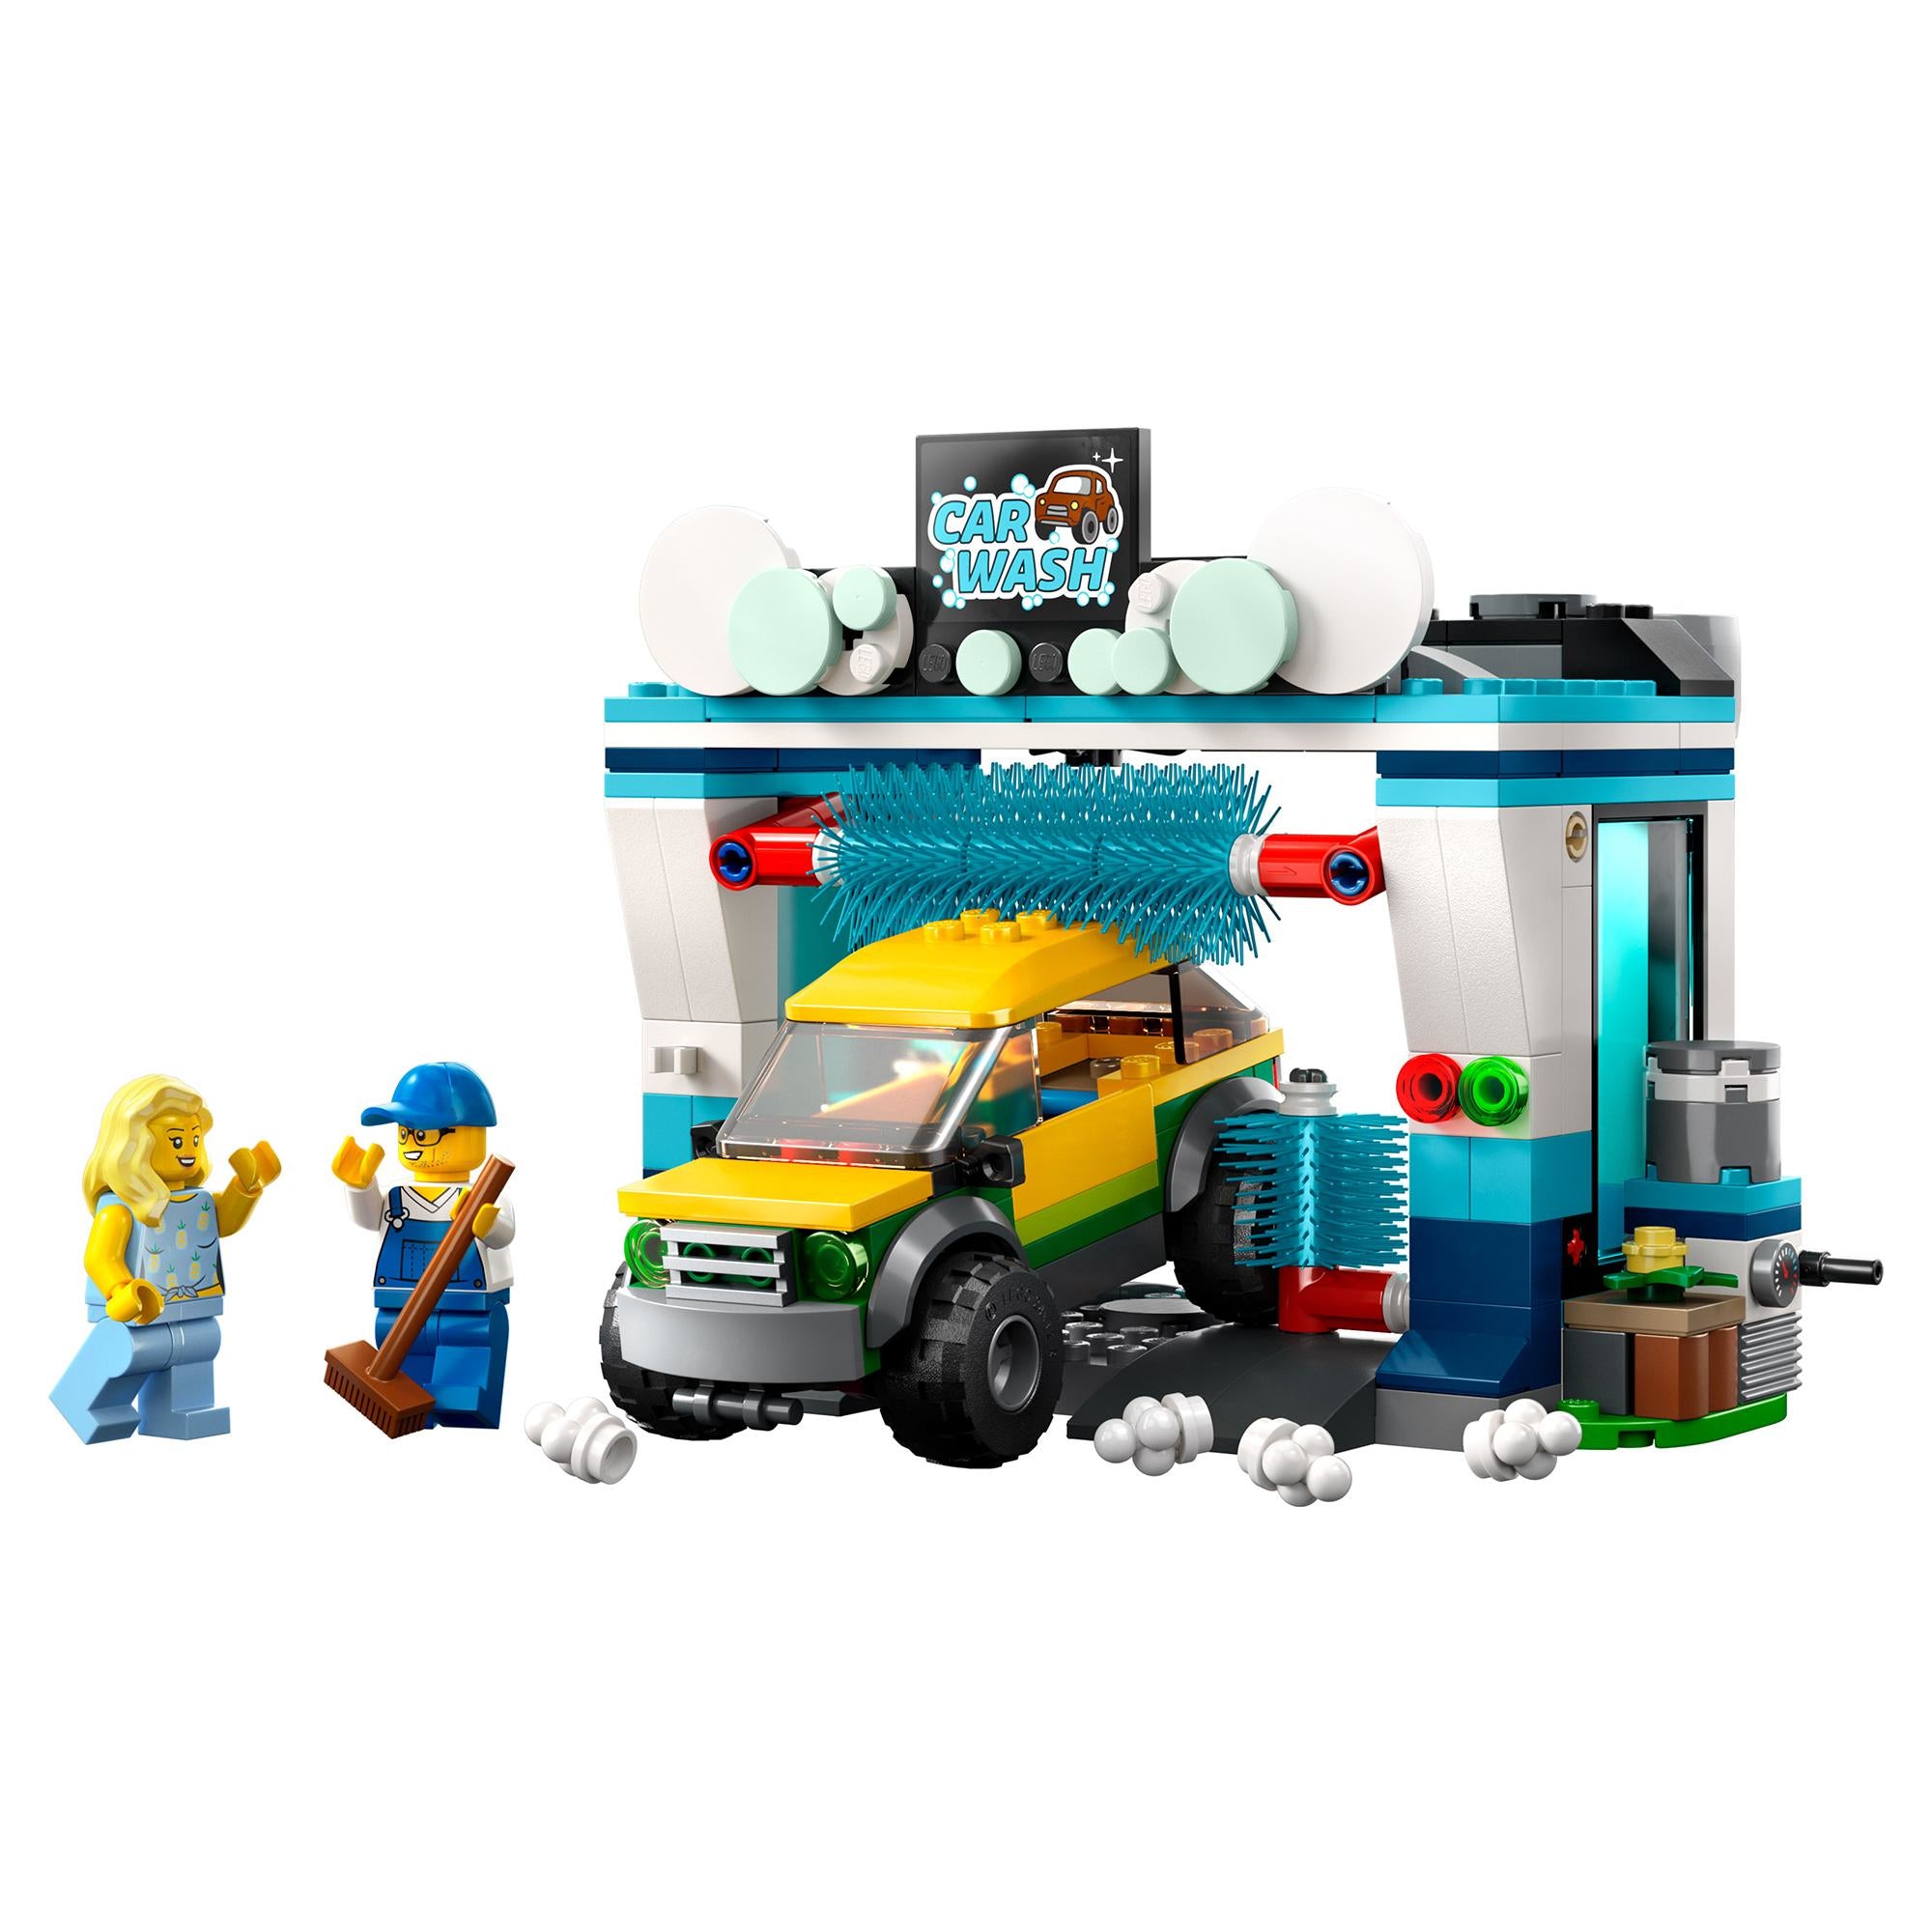 60362 - LEGO My City - Autolavaggio